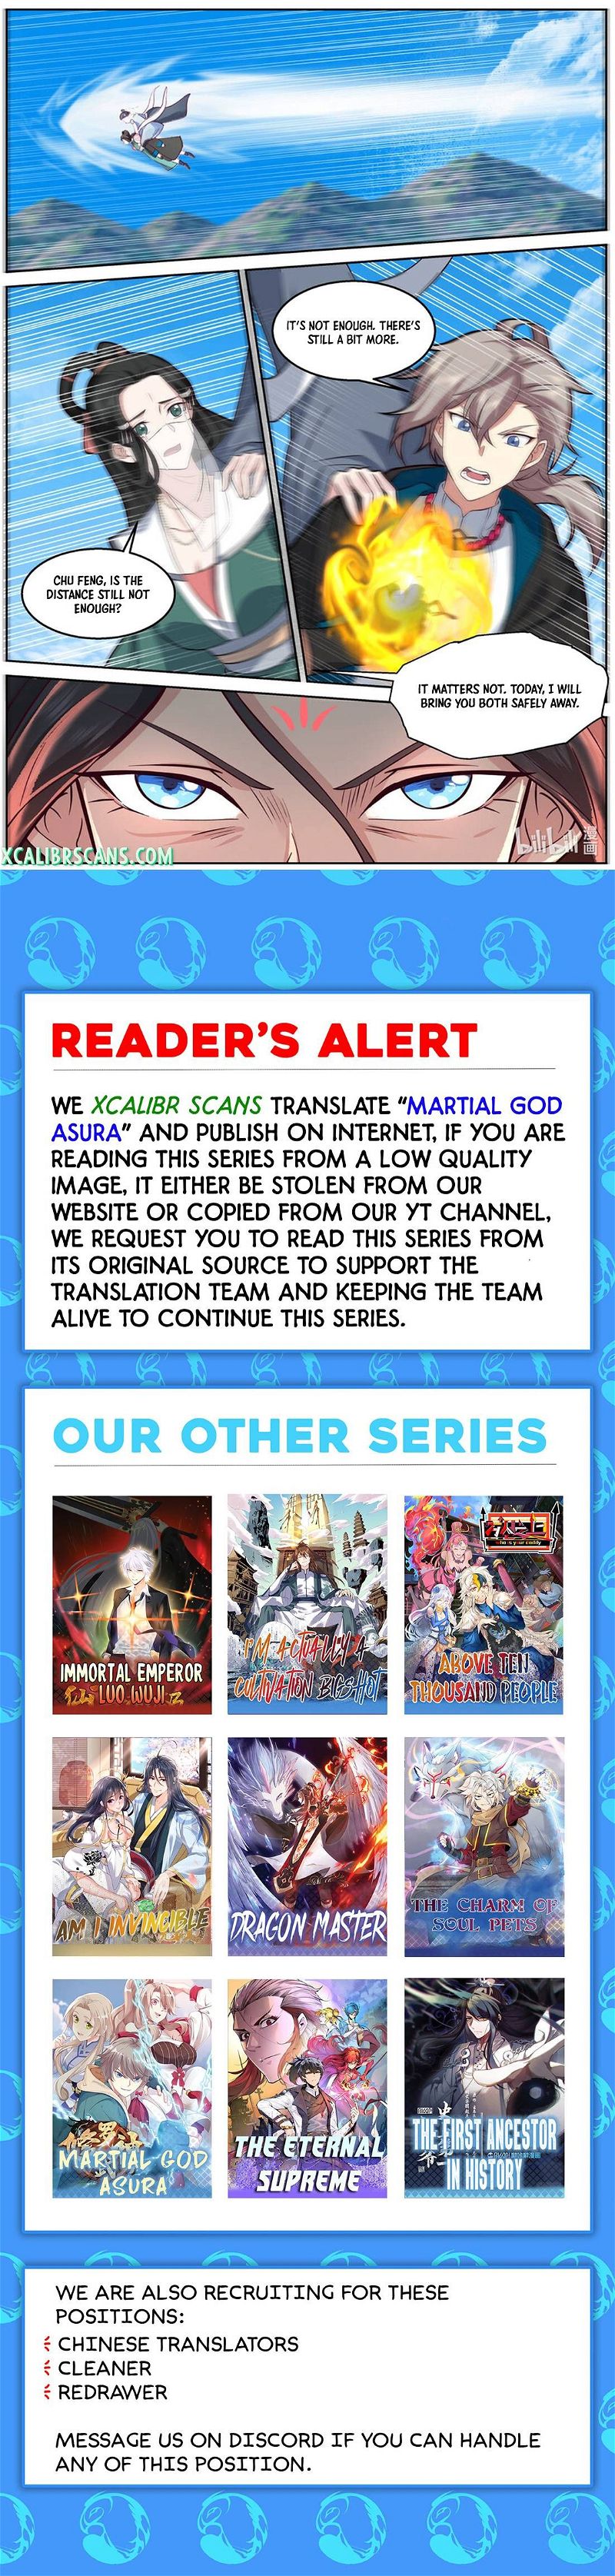 Martial God Asura Chapter 585 page 10